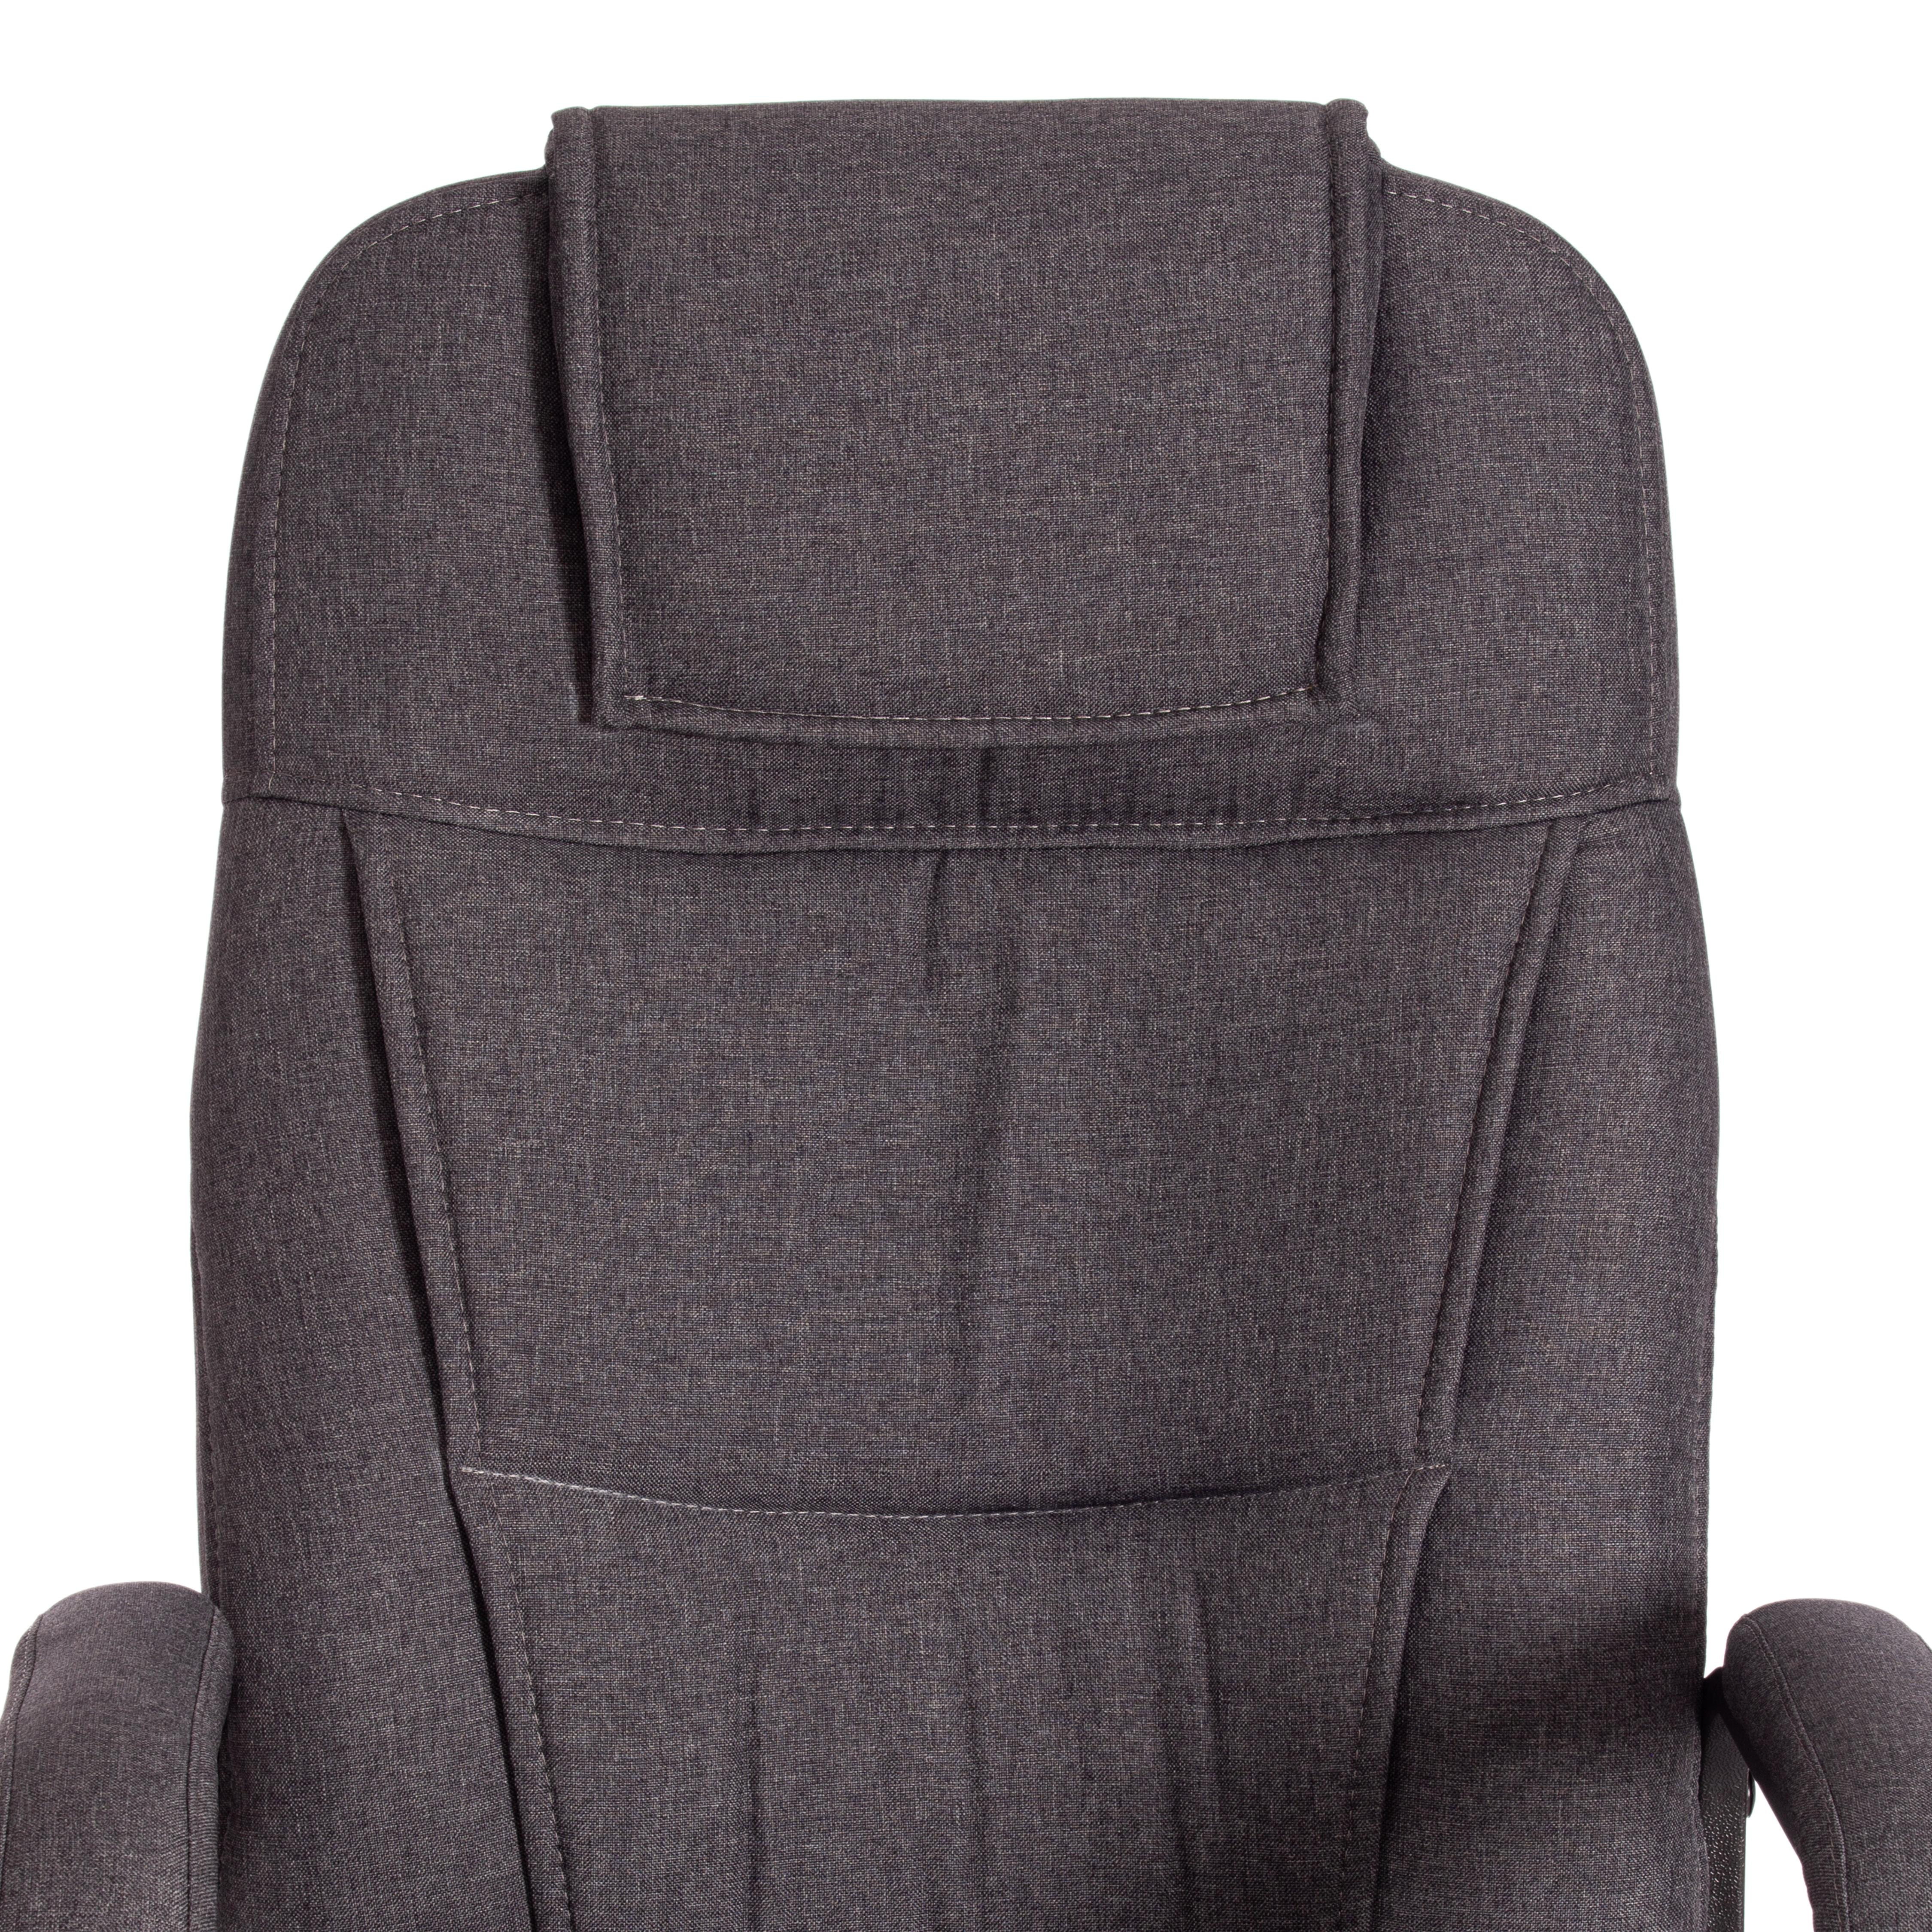 Кресло BERGAMO (22) ткань, темно-серый, F68